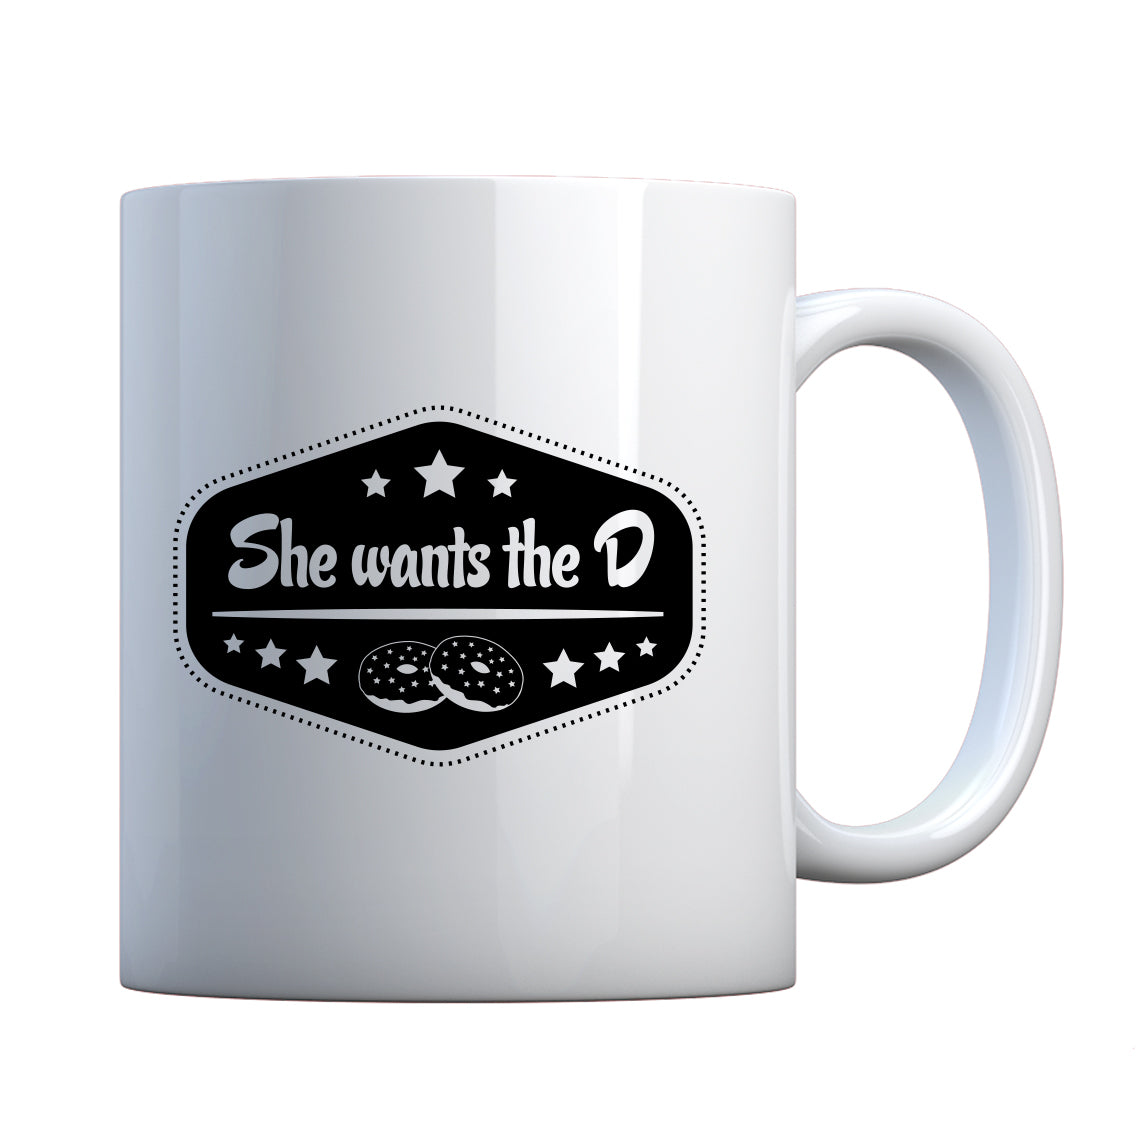 Mug She Wants the D Ceramic Gift Mug